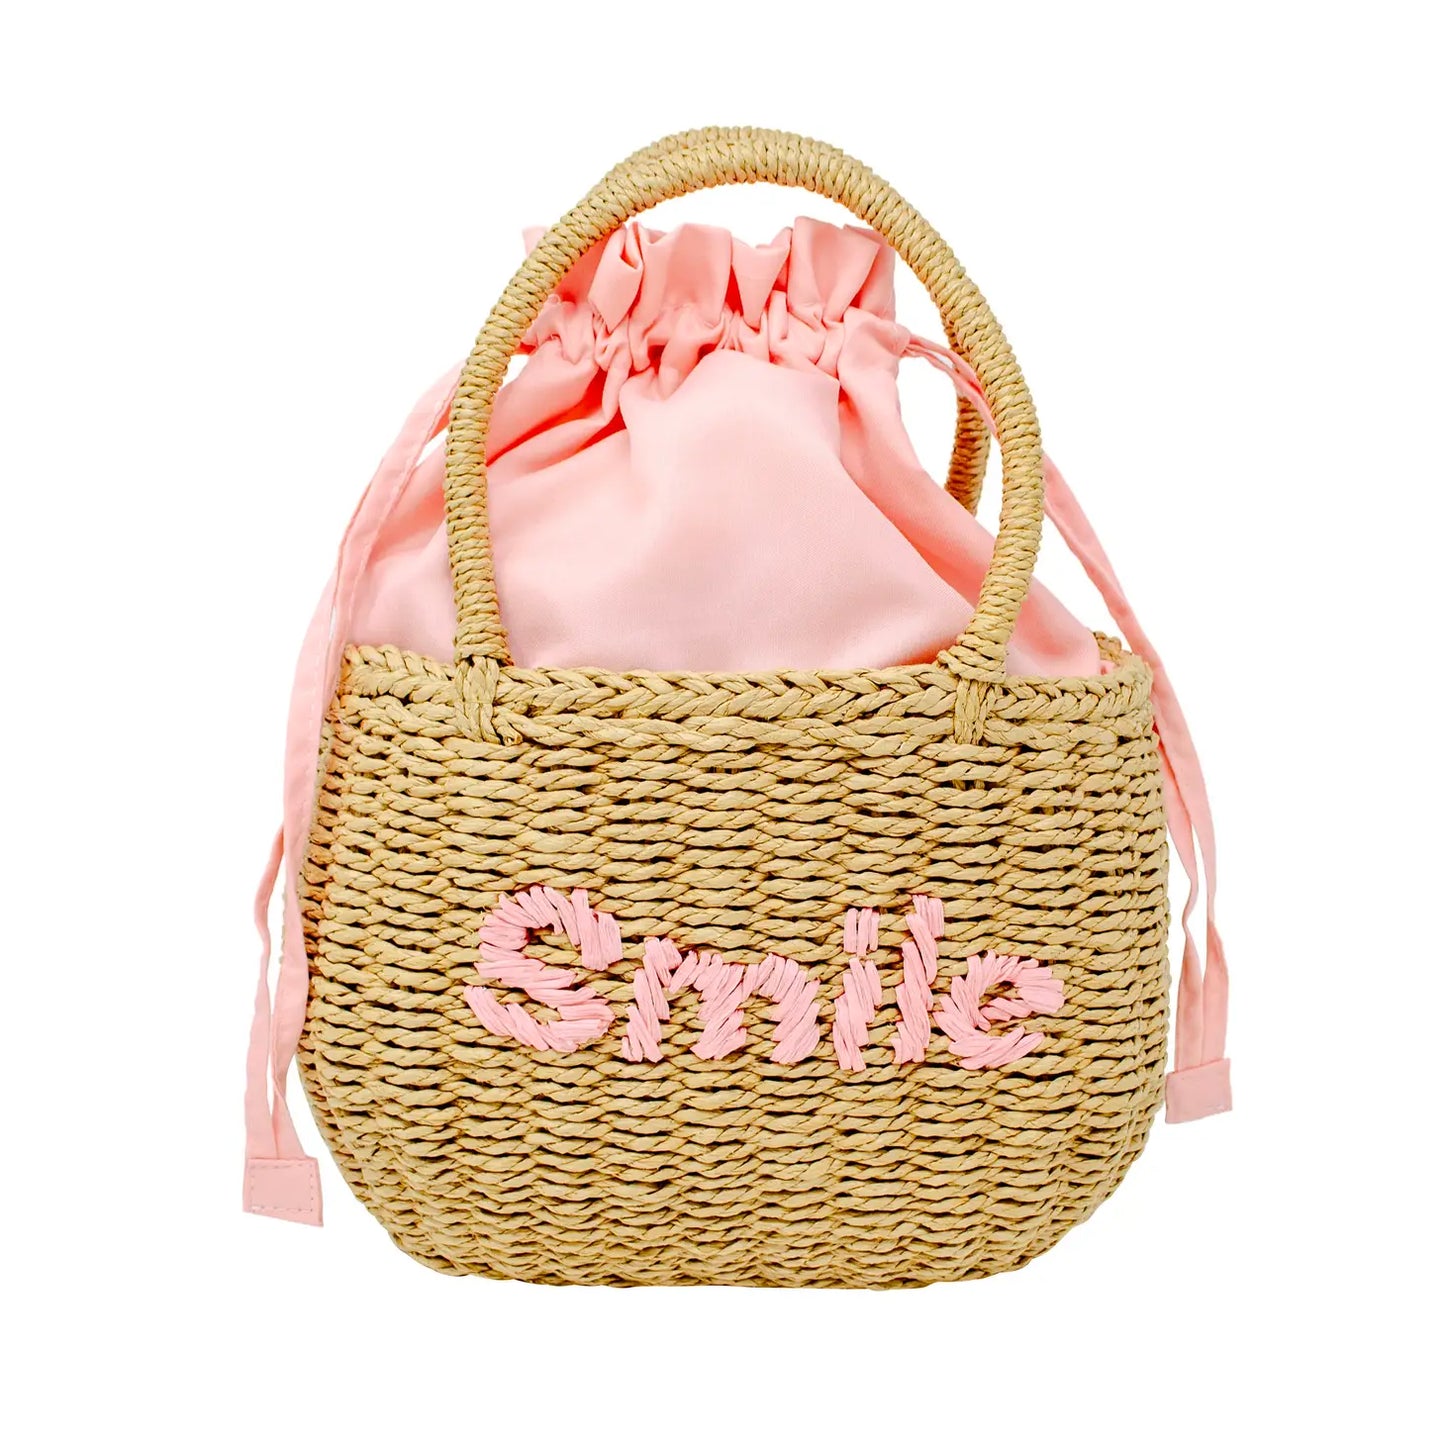 Zomi Gems - Wicker Basket "Smile" Bag Pink